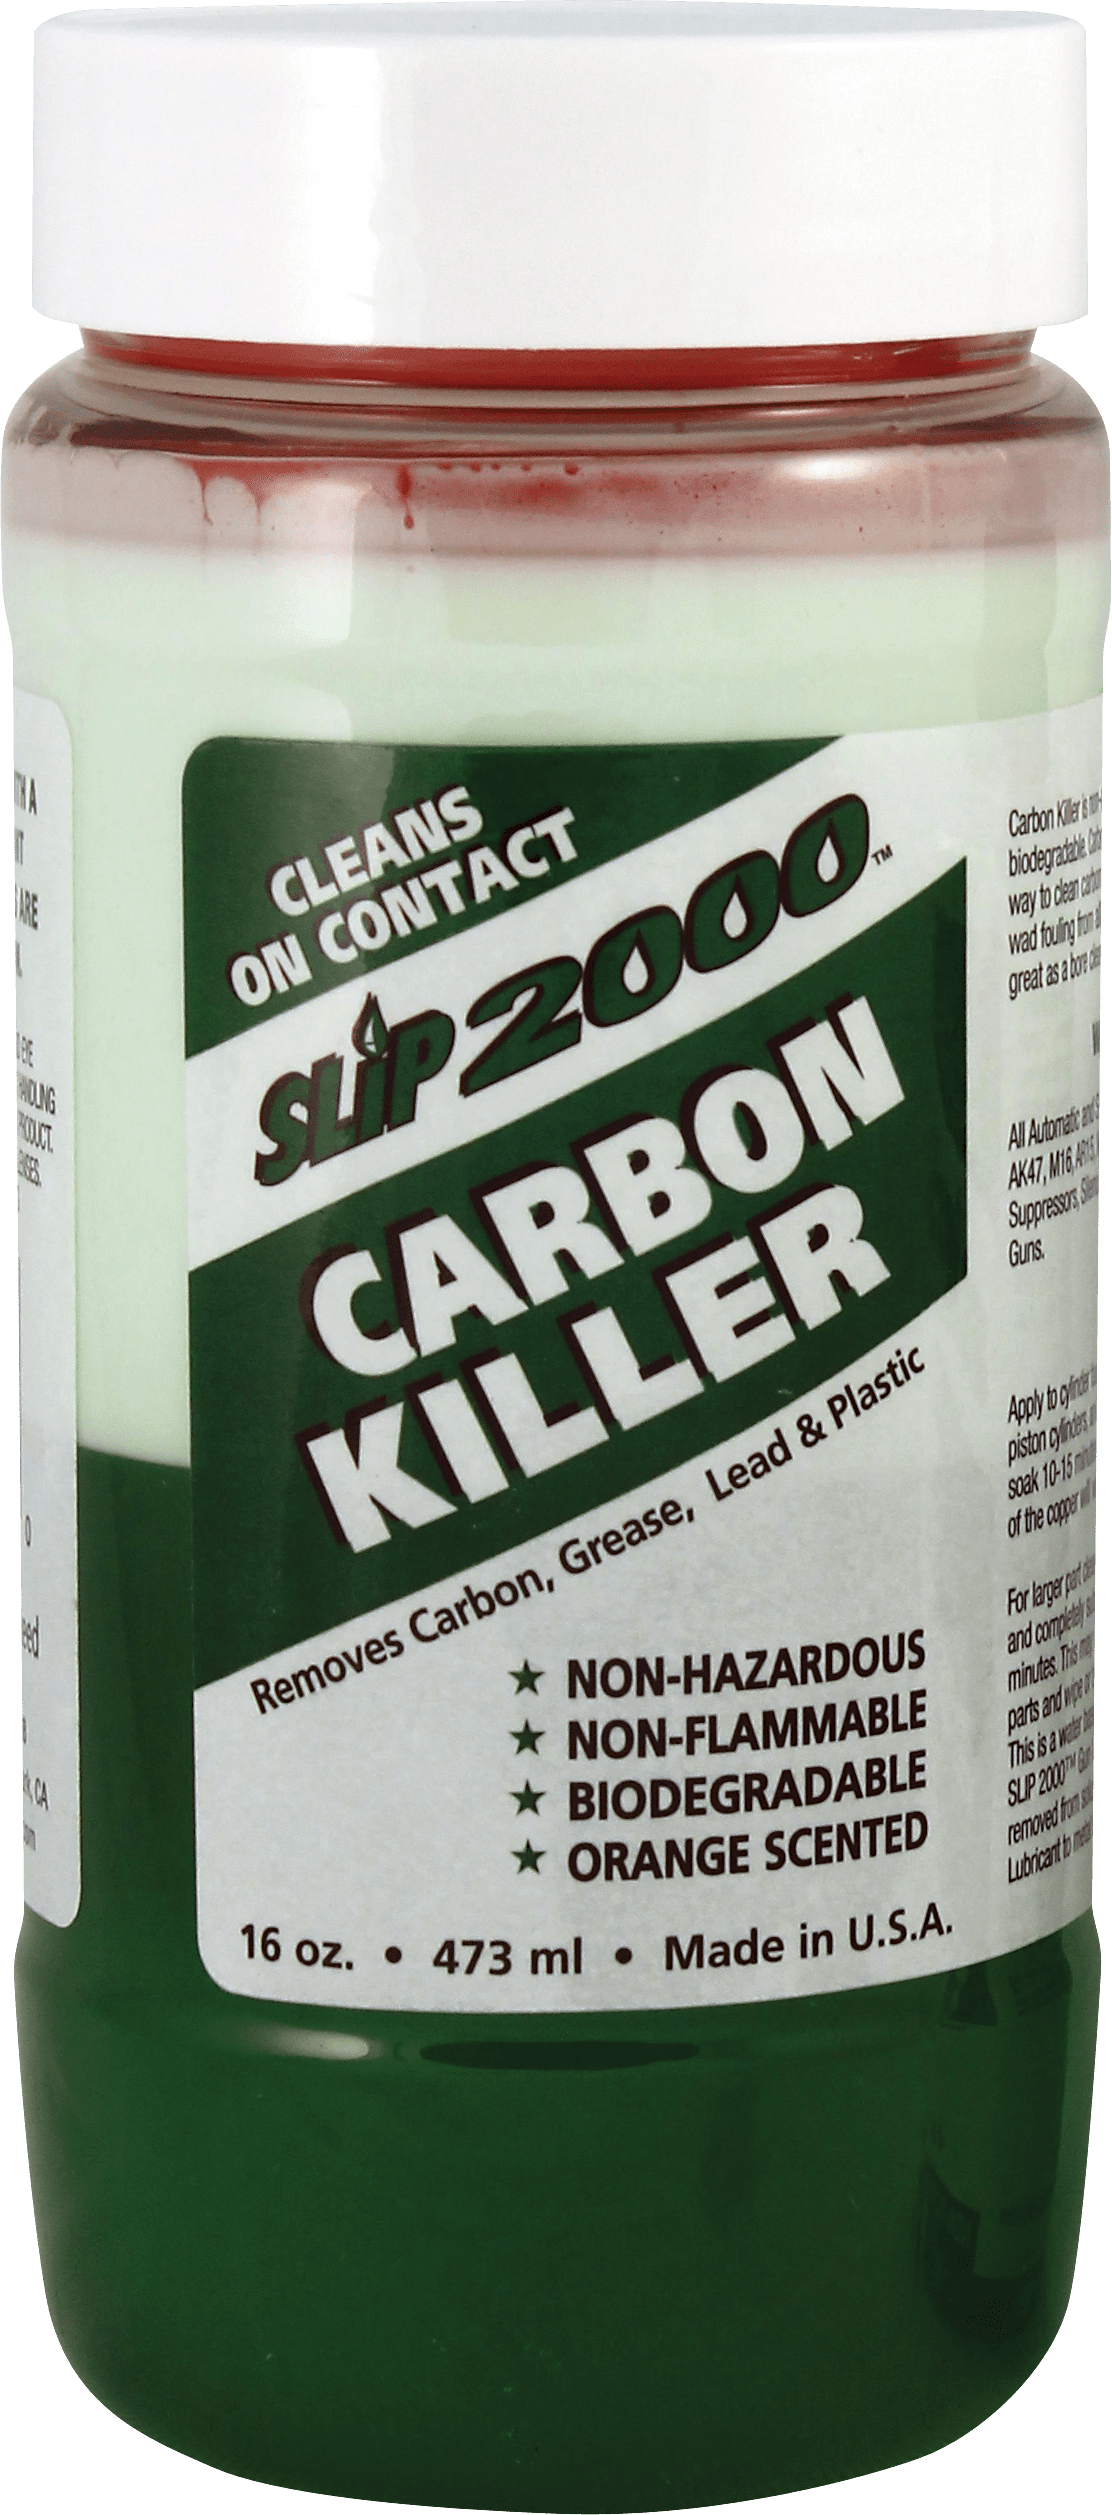 Slip 2000 Slip 2000 16oz. Carbon Killer - Bore Cleaner Cleaning And Gun Care